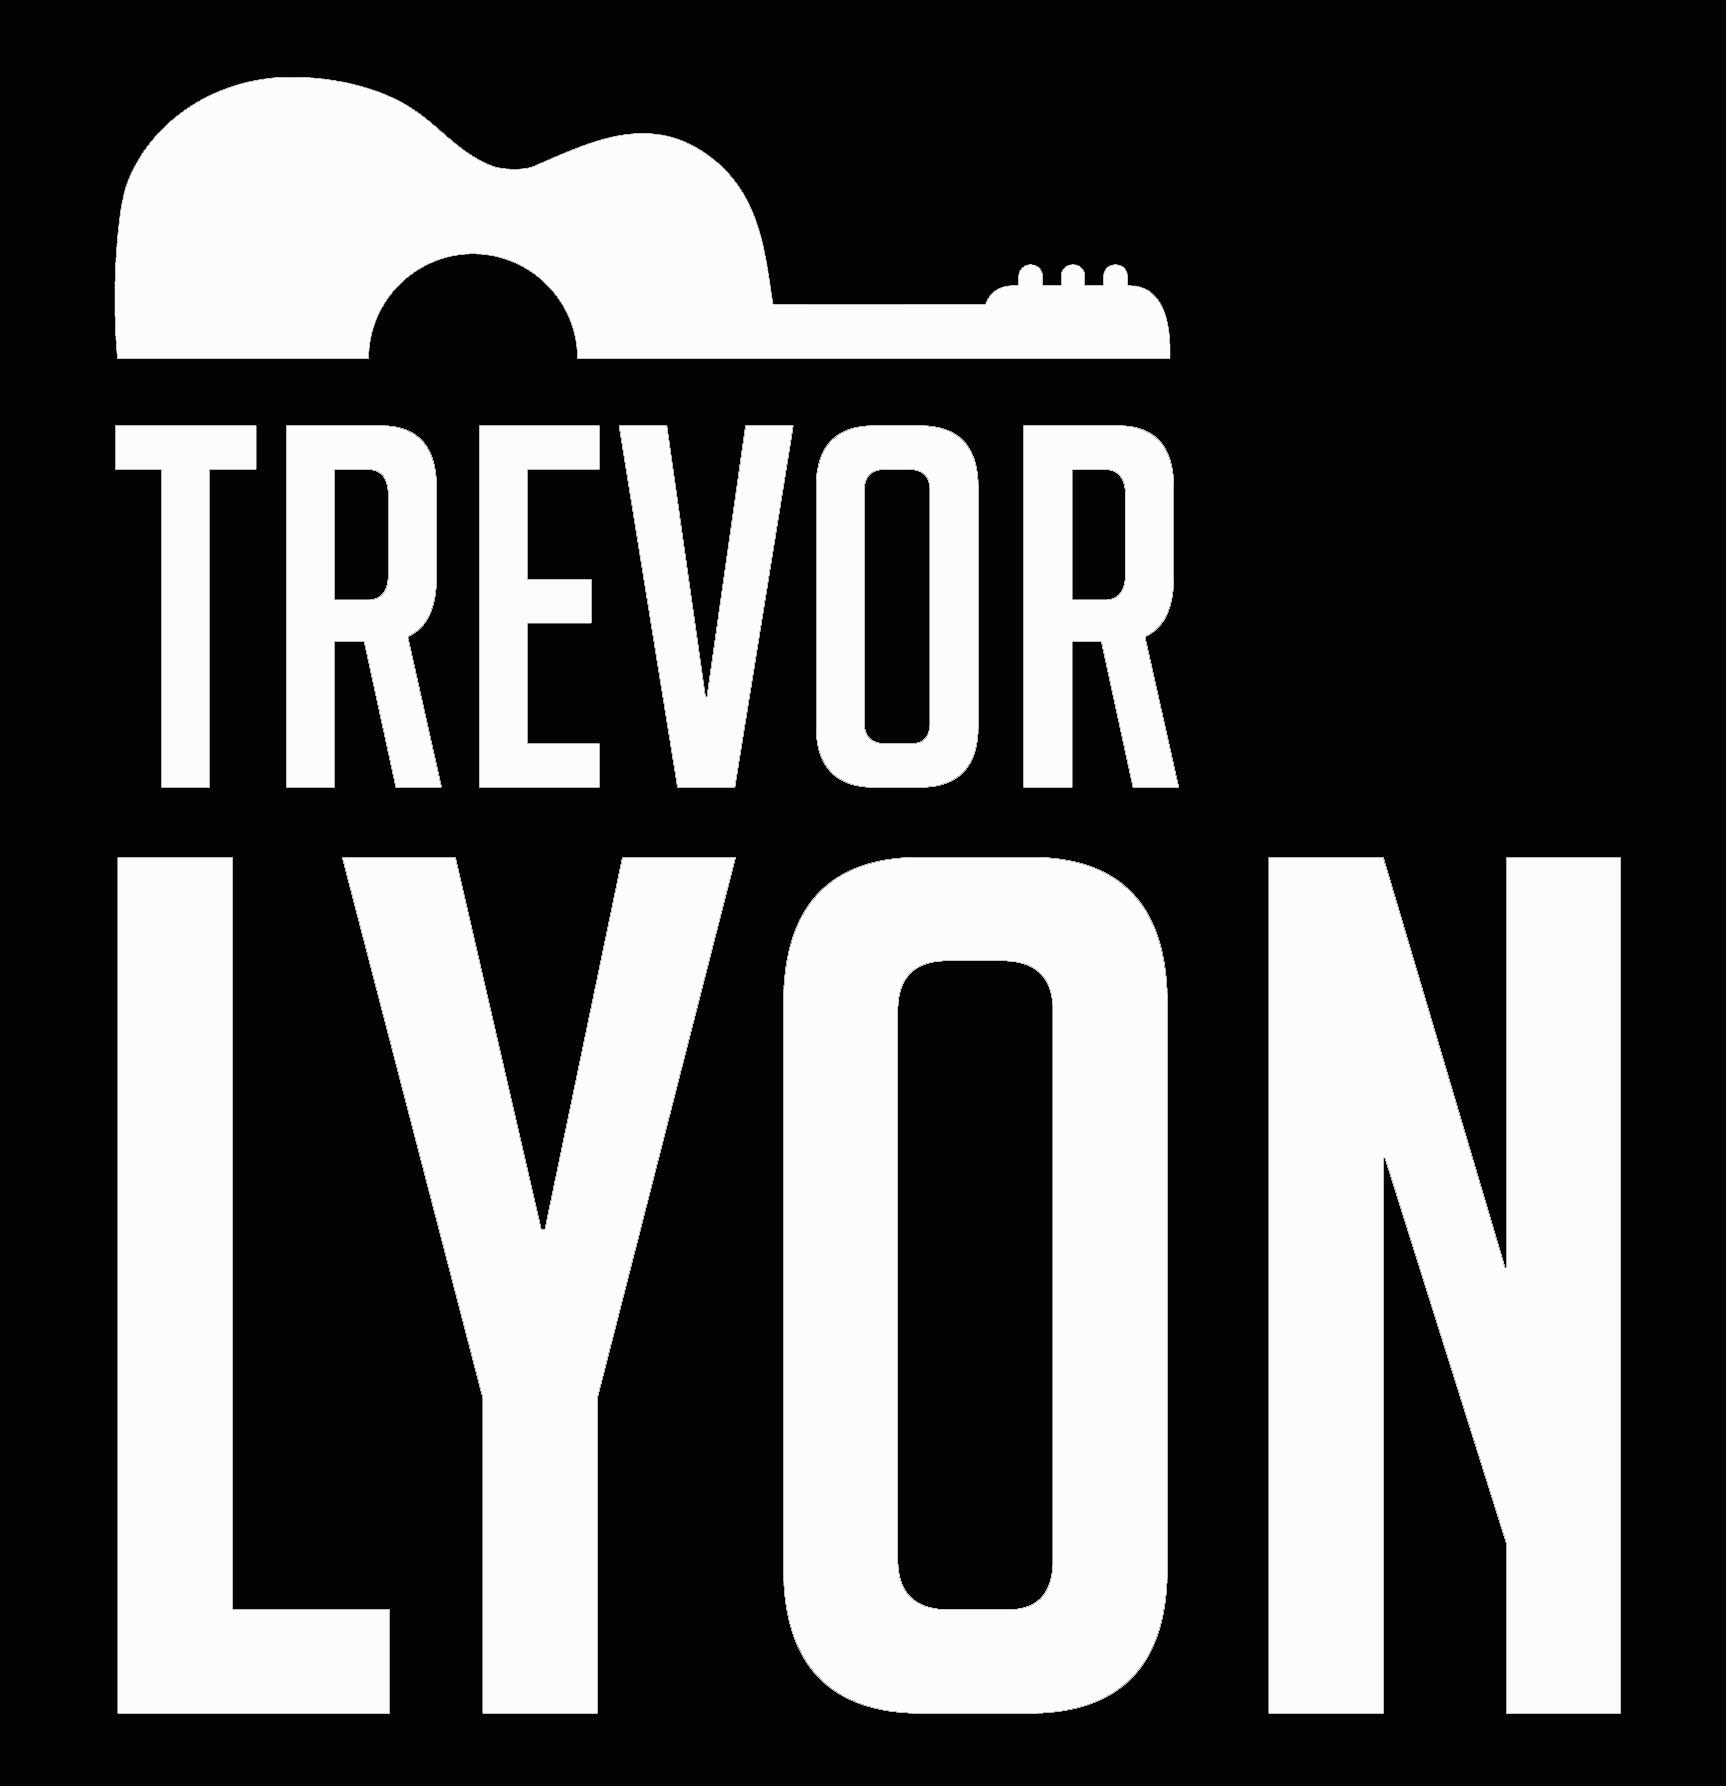 Trevor Lyon